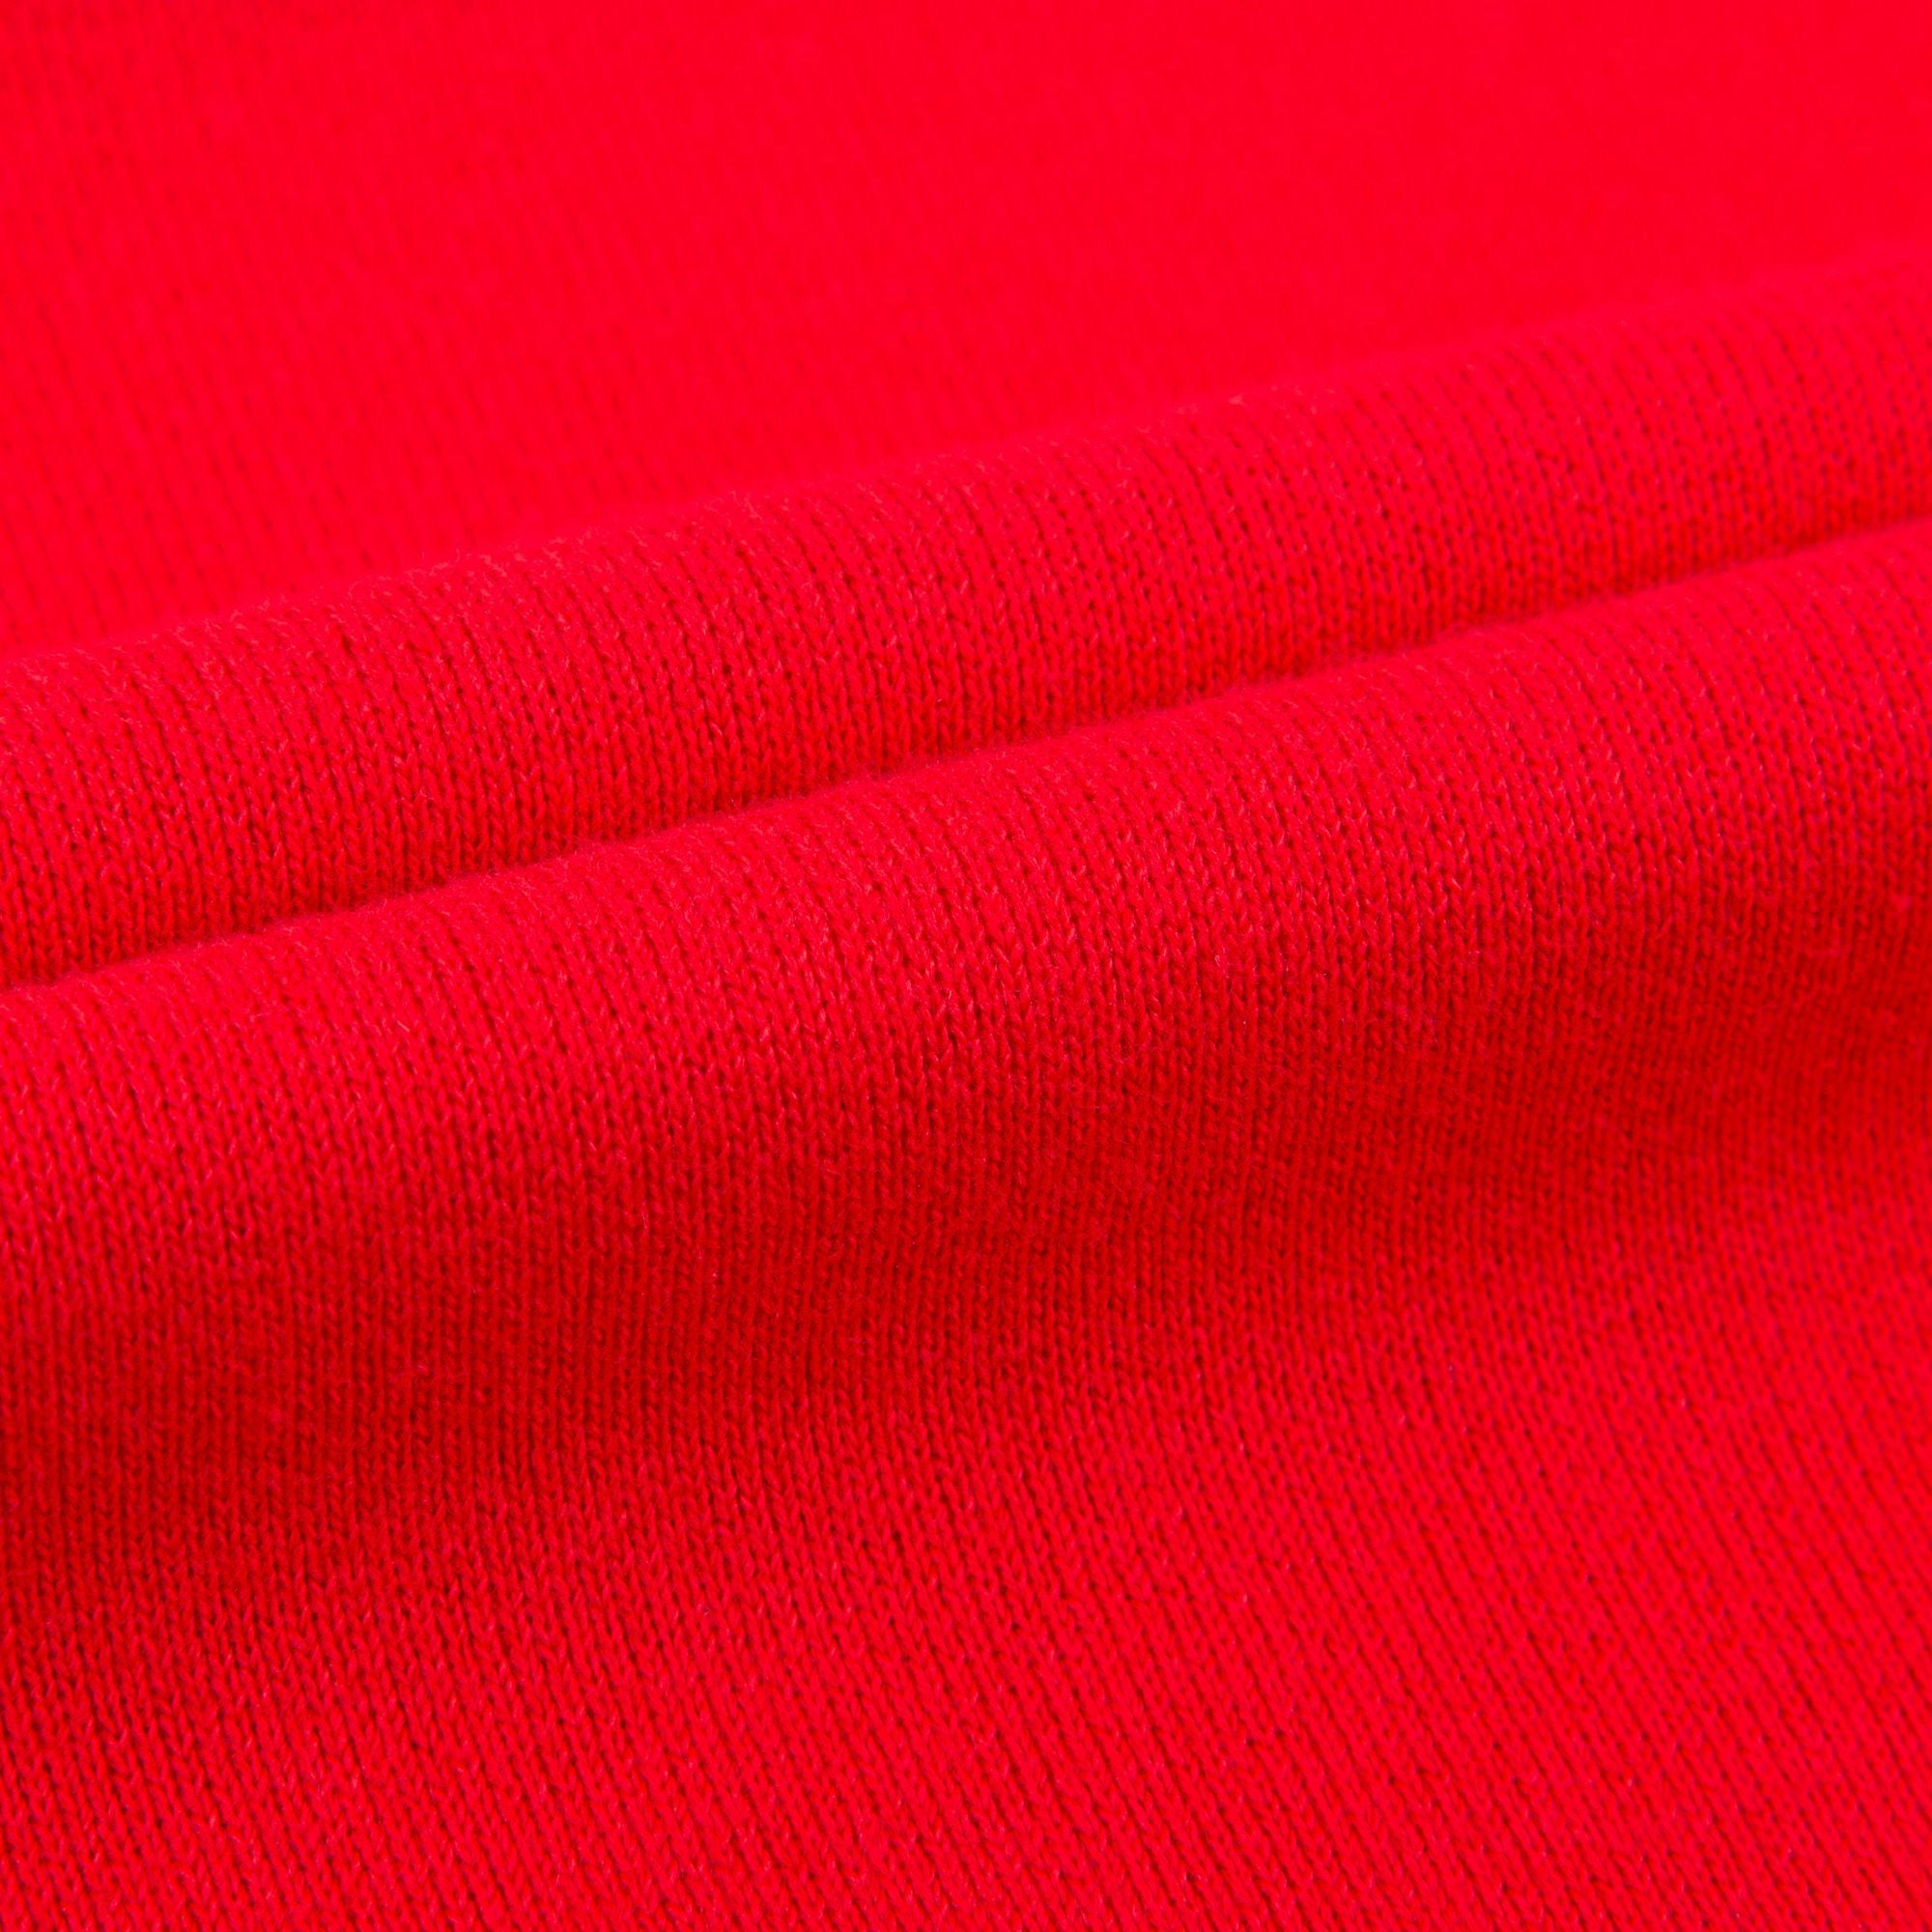 Girls Red Logo Sweatshirt